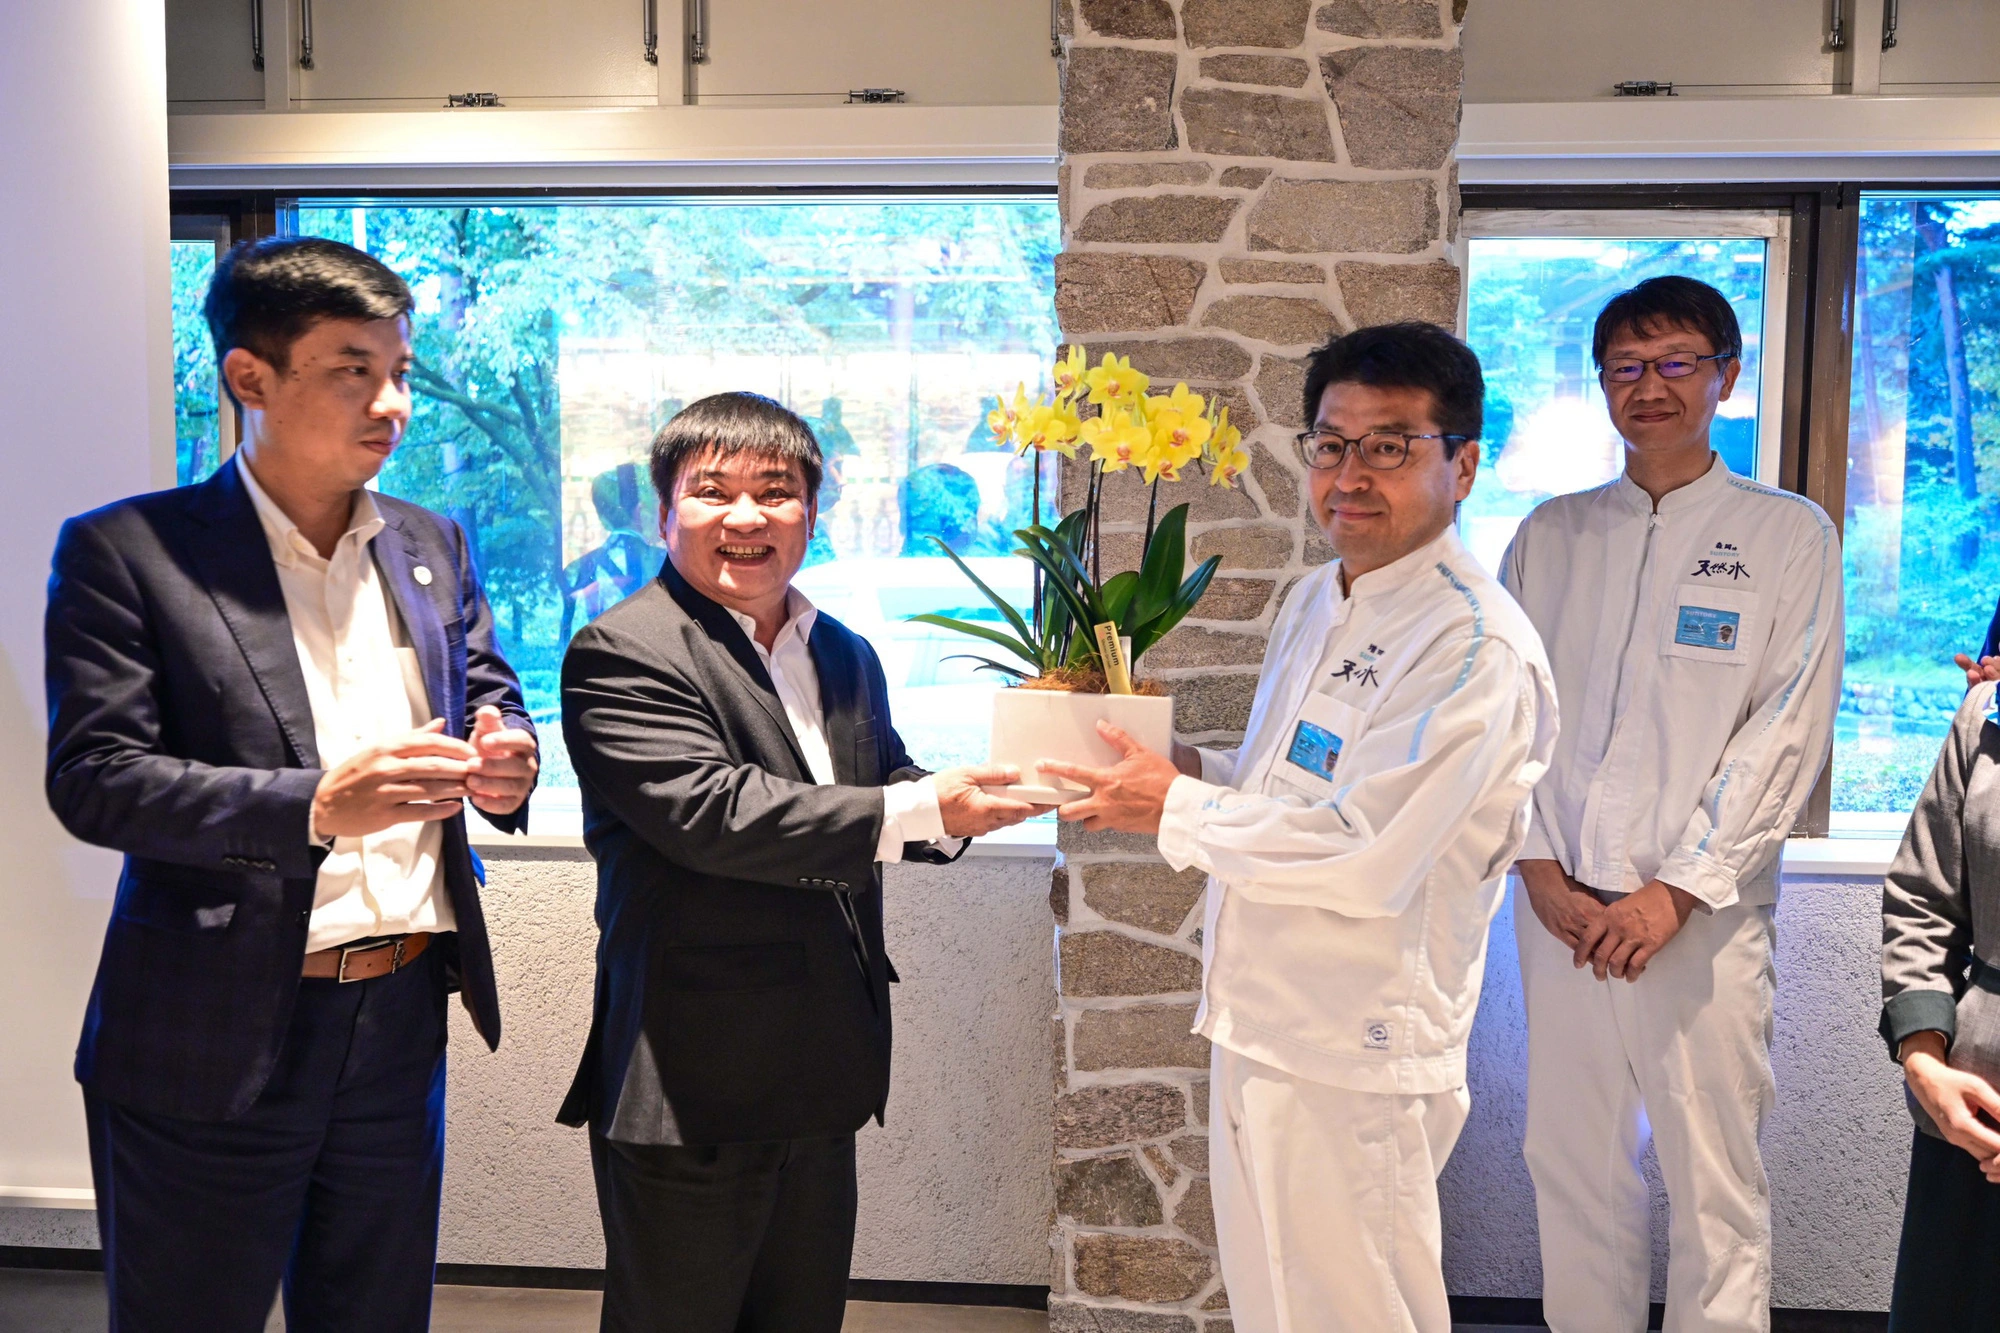 Le The Chu (L, 2nd), Editor-in-Chief of Tuoi Tre newspaper, presents a souvenir to Shigeo Masuda, CEO of Suntory Hakushu Distillery